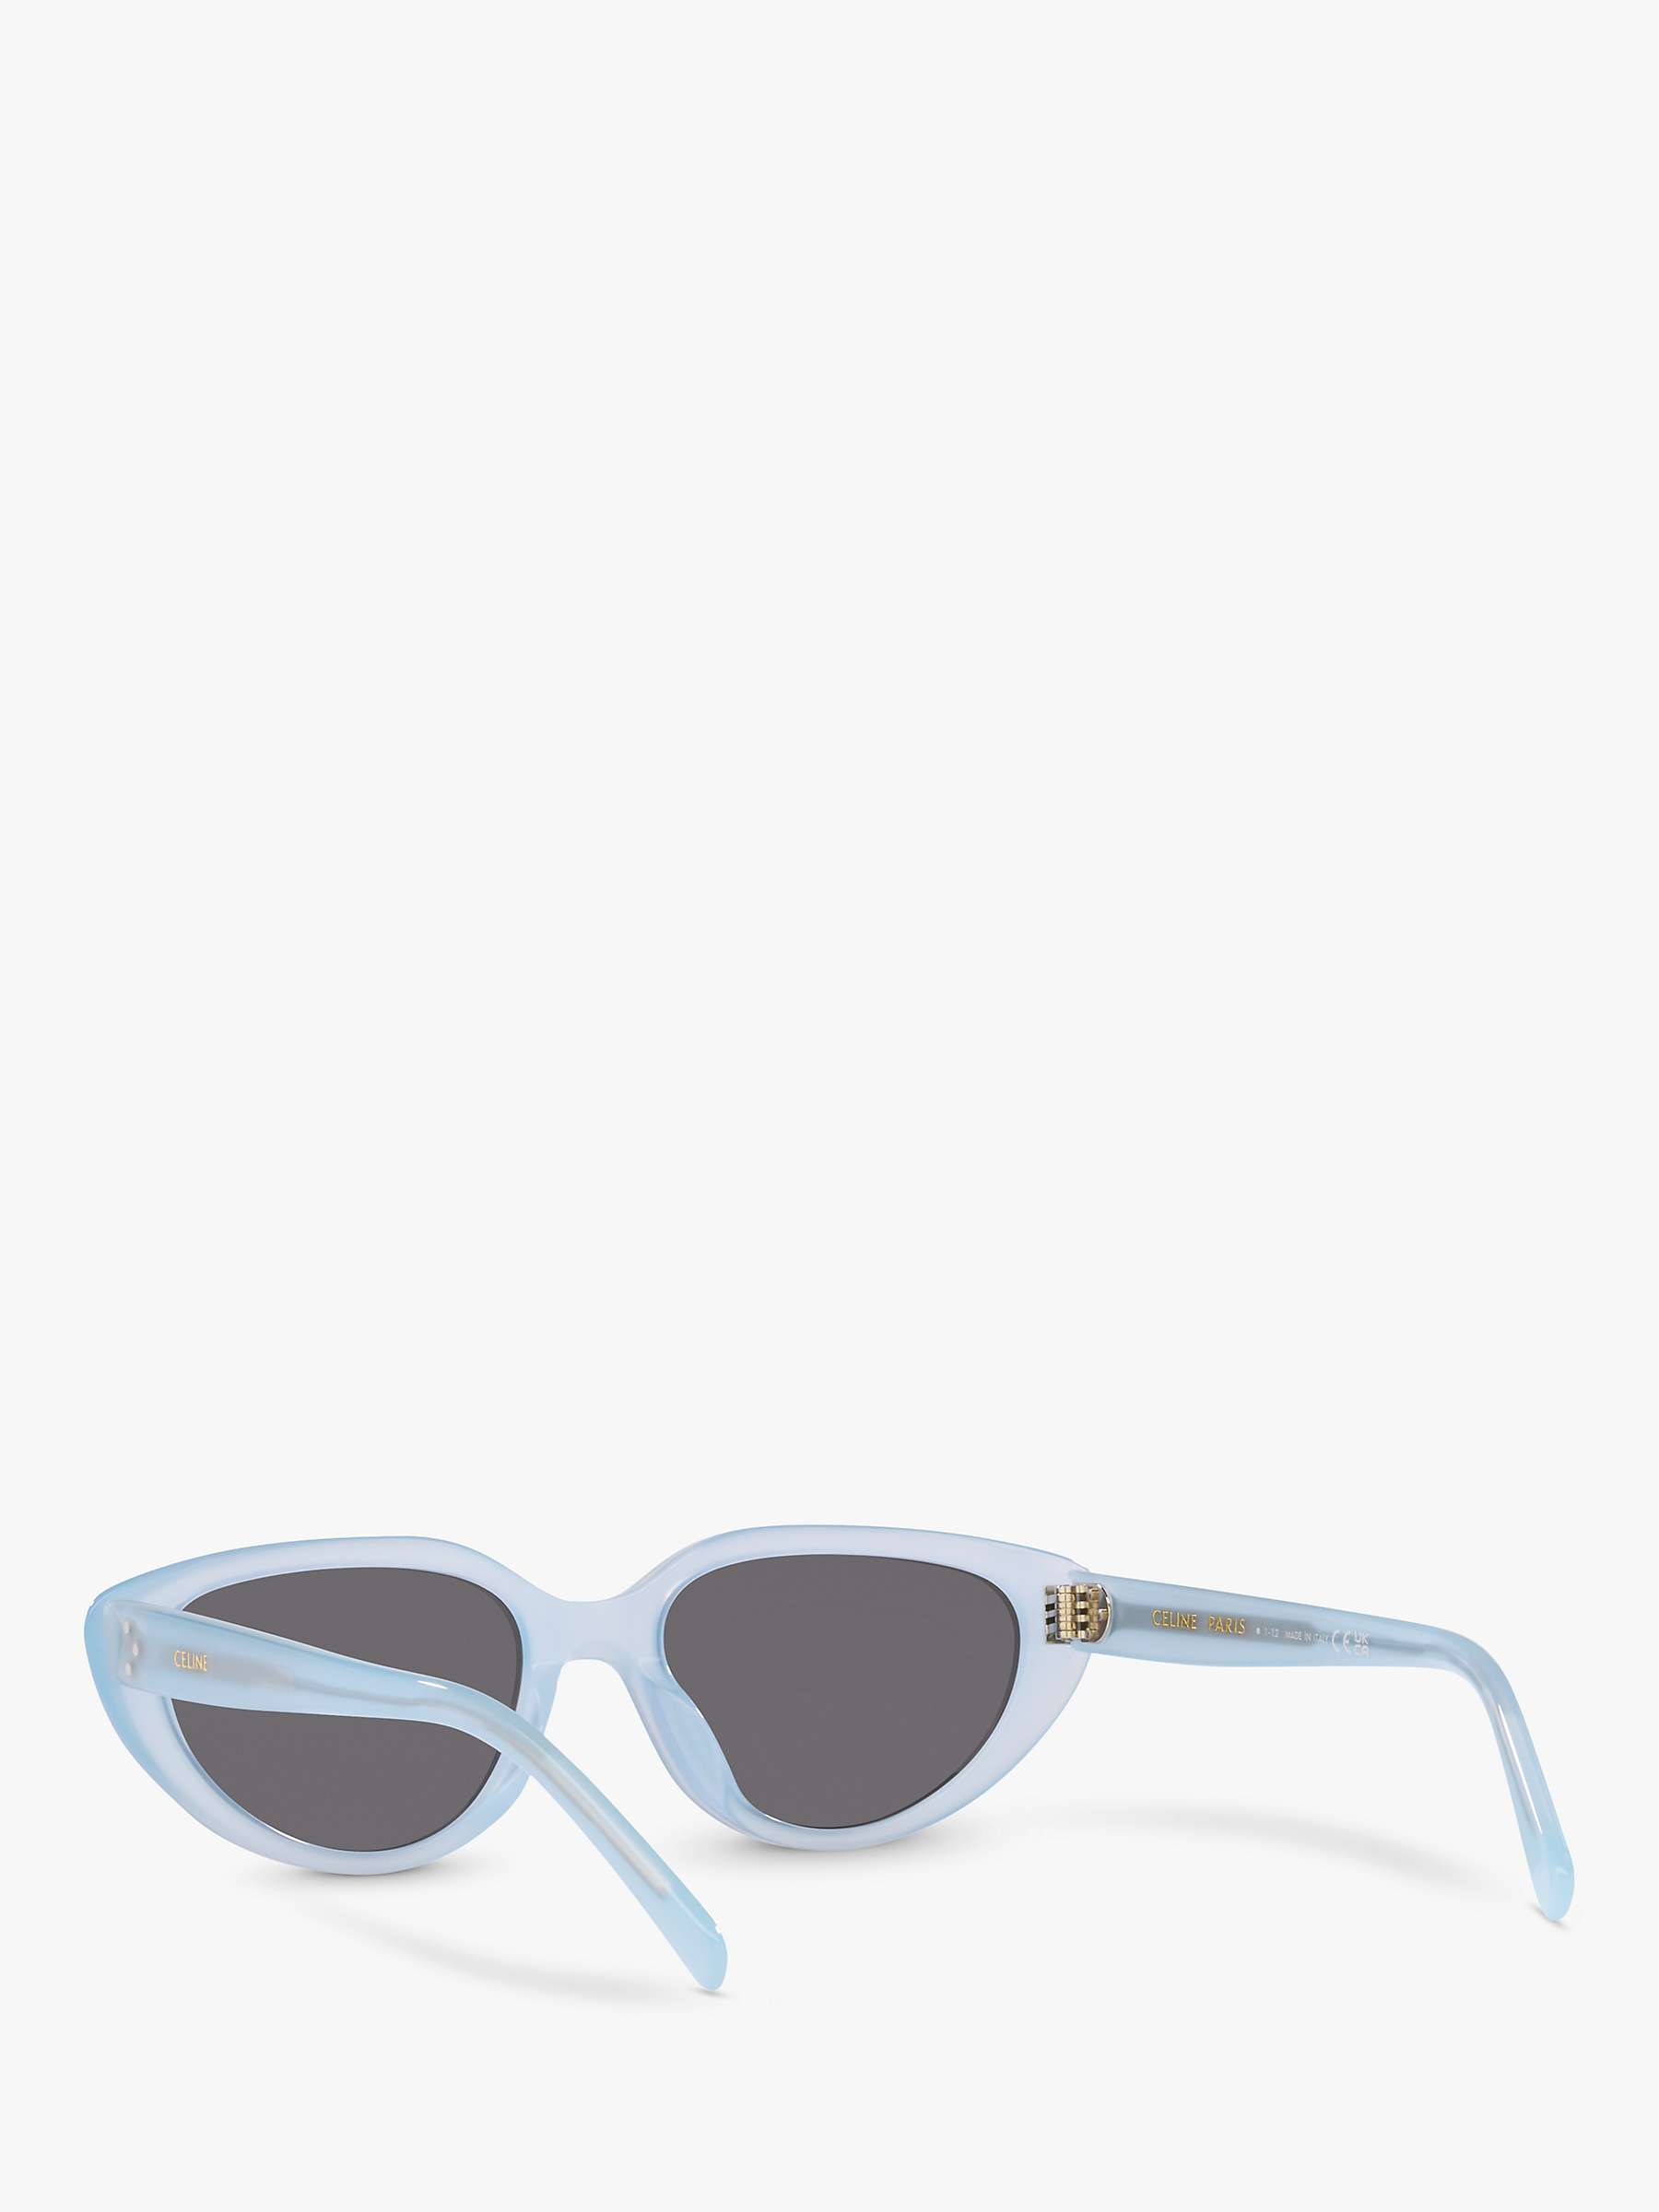 Buy Celine CL40220U Women's Cat's Eye Sunglasses, Light Blue/Grey Online at johnlewis.com